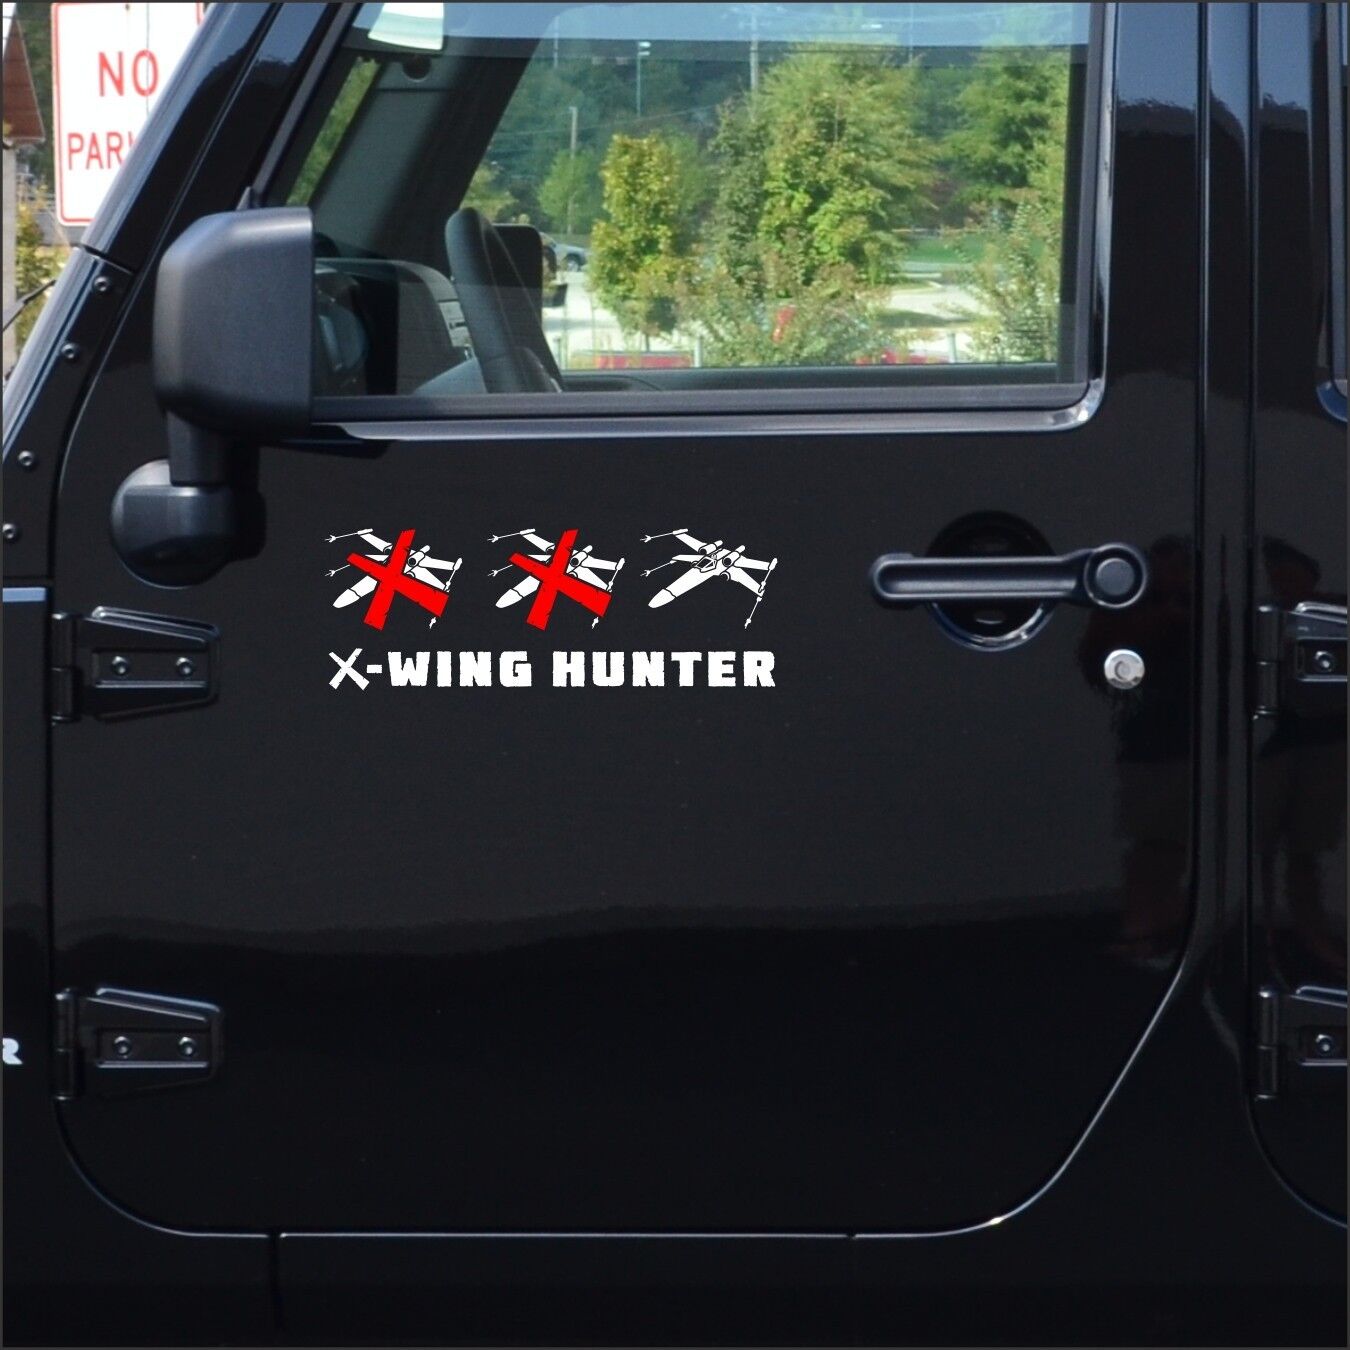 X-WING HUNTER - Rebel Alliance Car Body Vinyl Sticker Decal